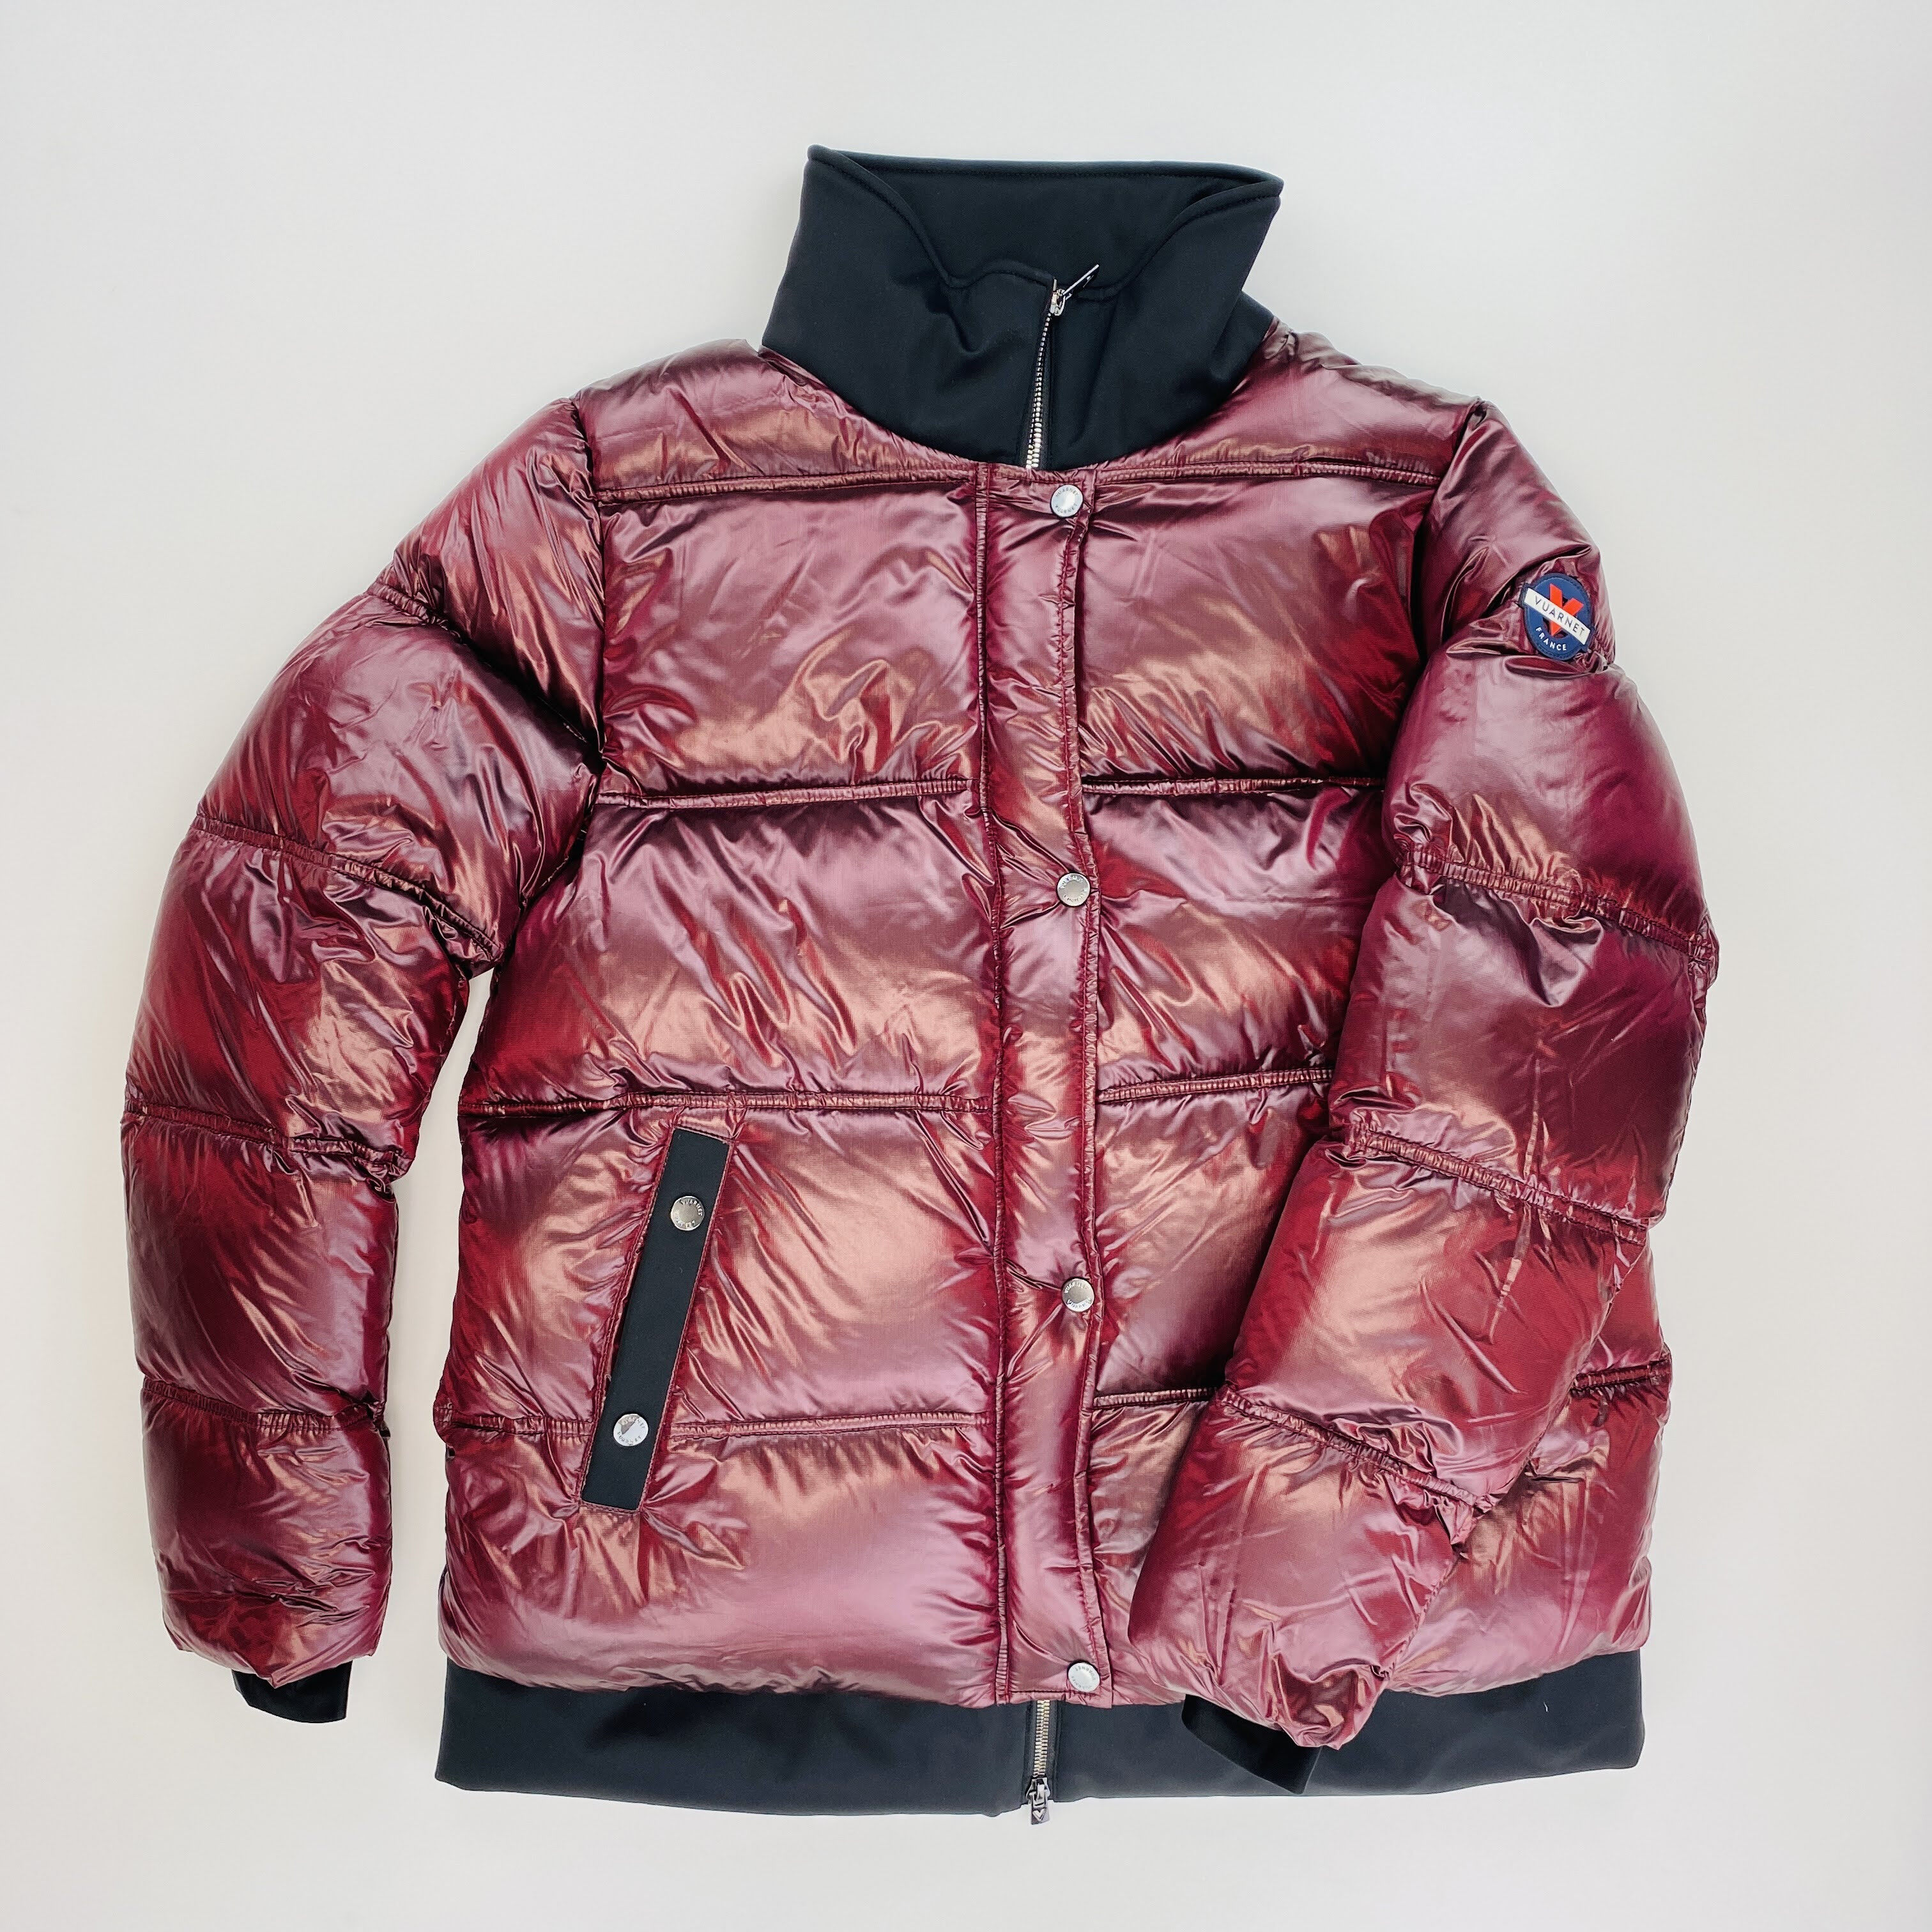 Vuarnet Loira Jacket - Second Hand Synthetic jacket - Women's - Red - S | Hardloop